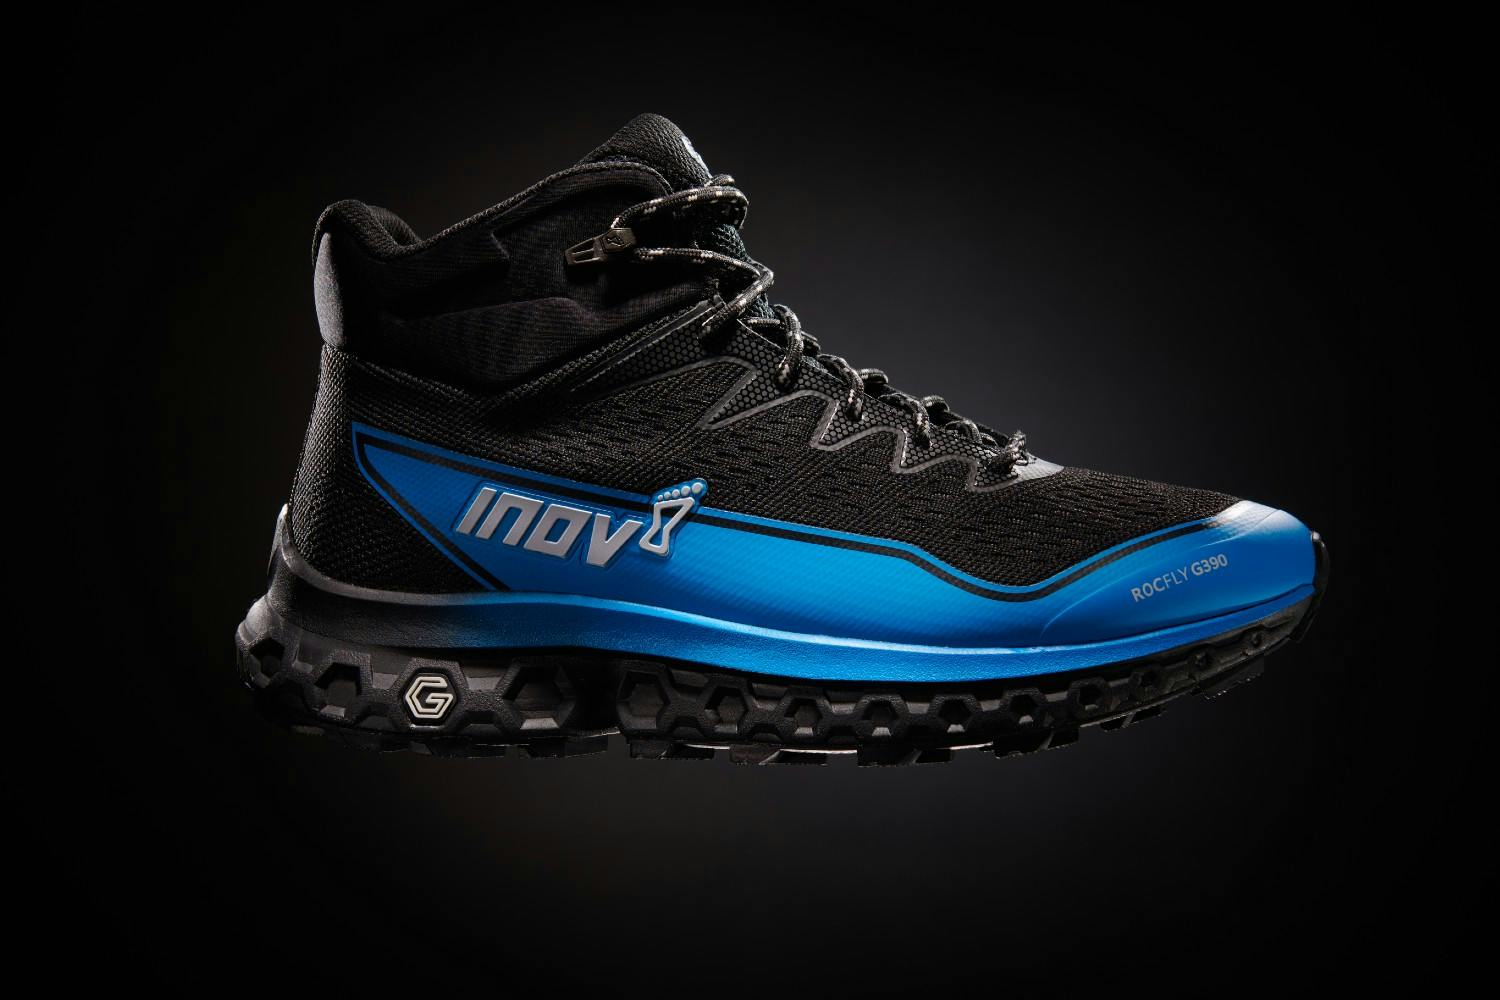 inov8-rocfly-g-390-hiking-shoes